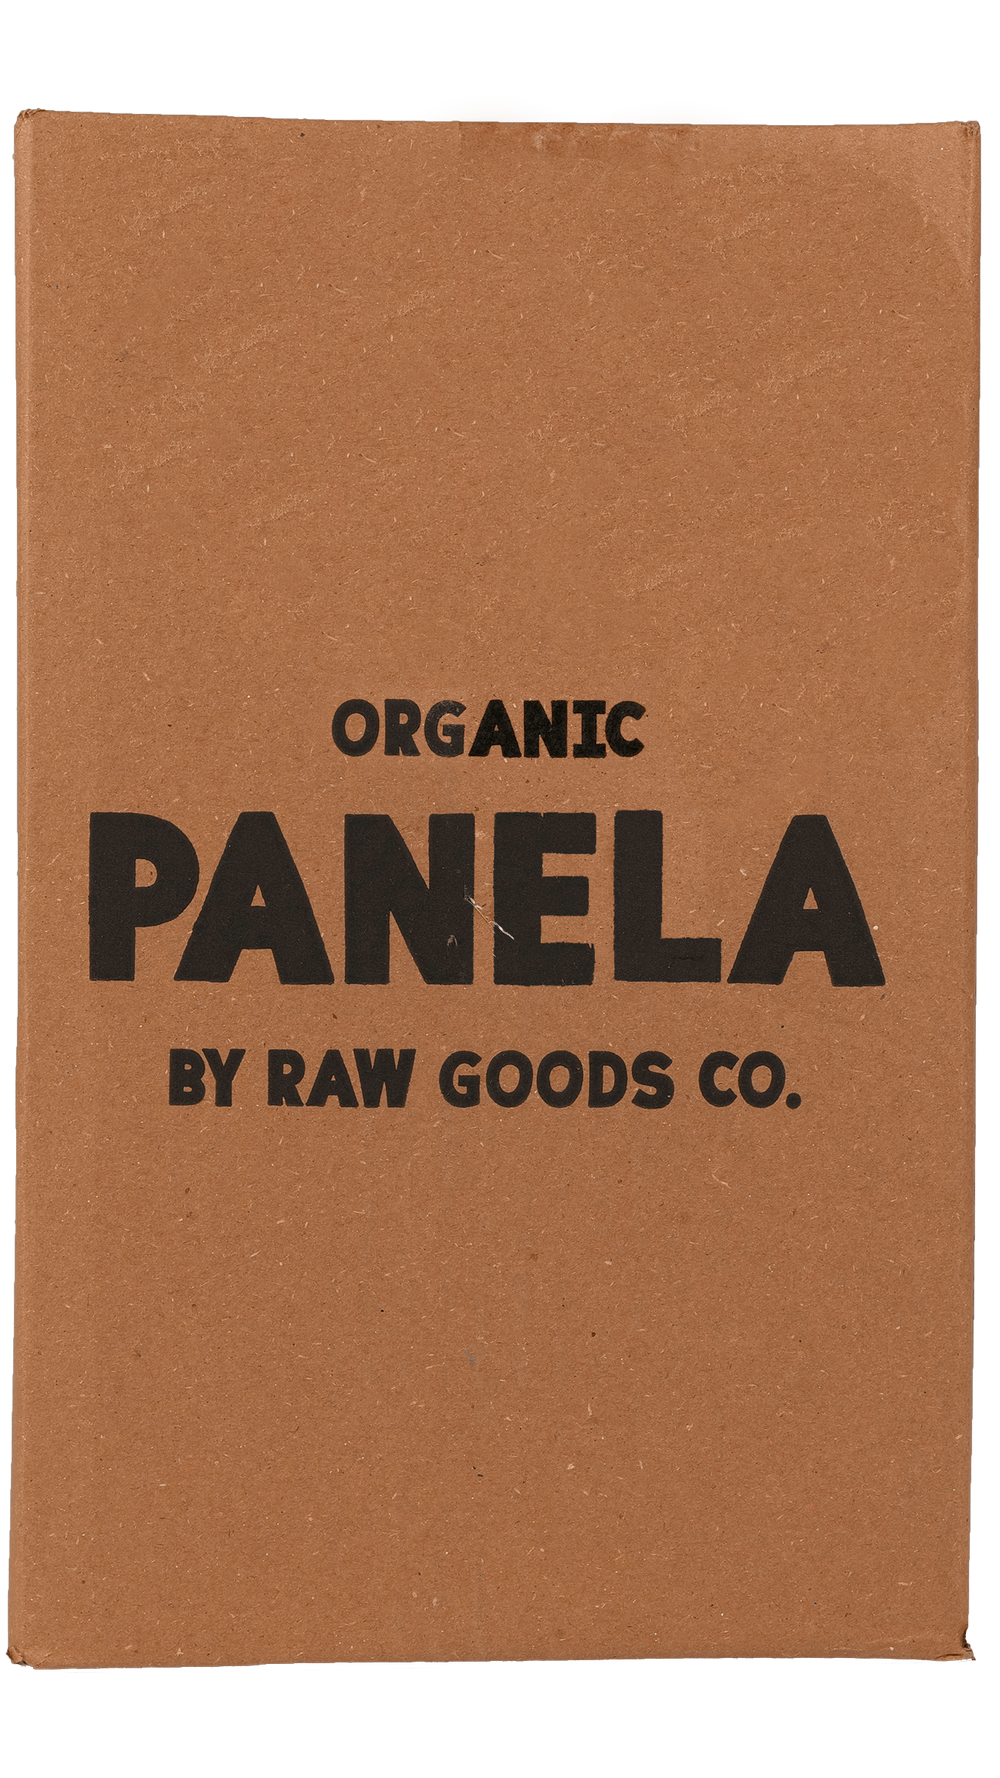 Organic Panela